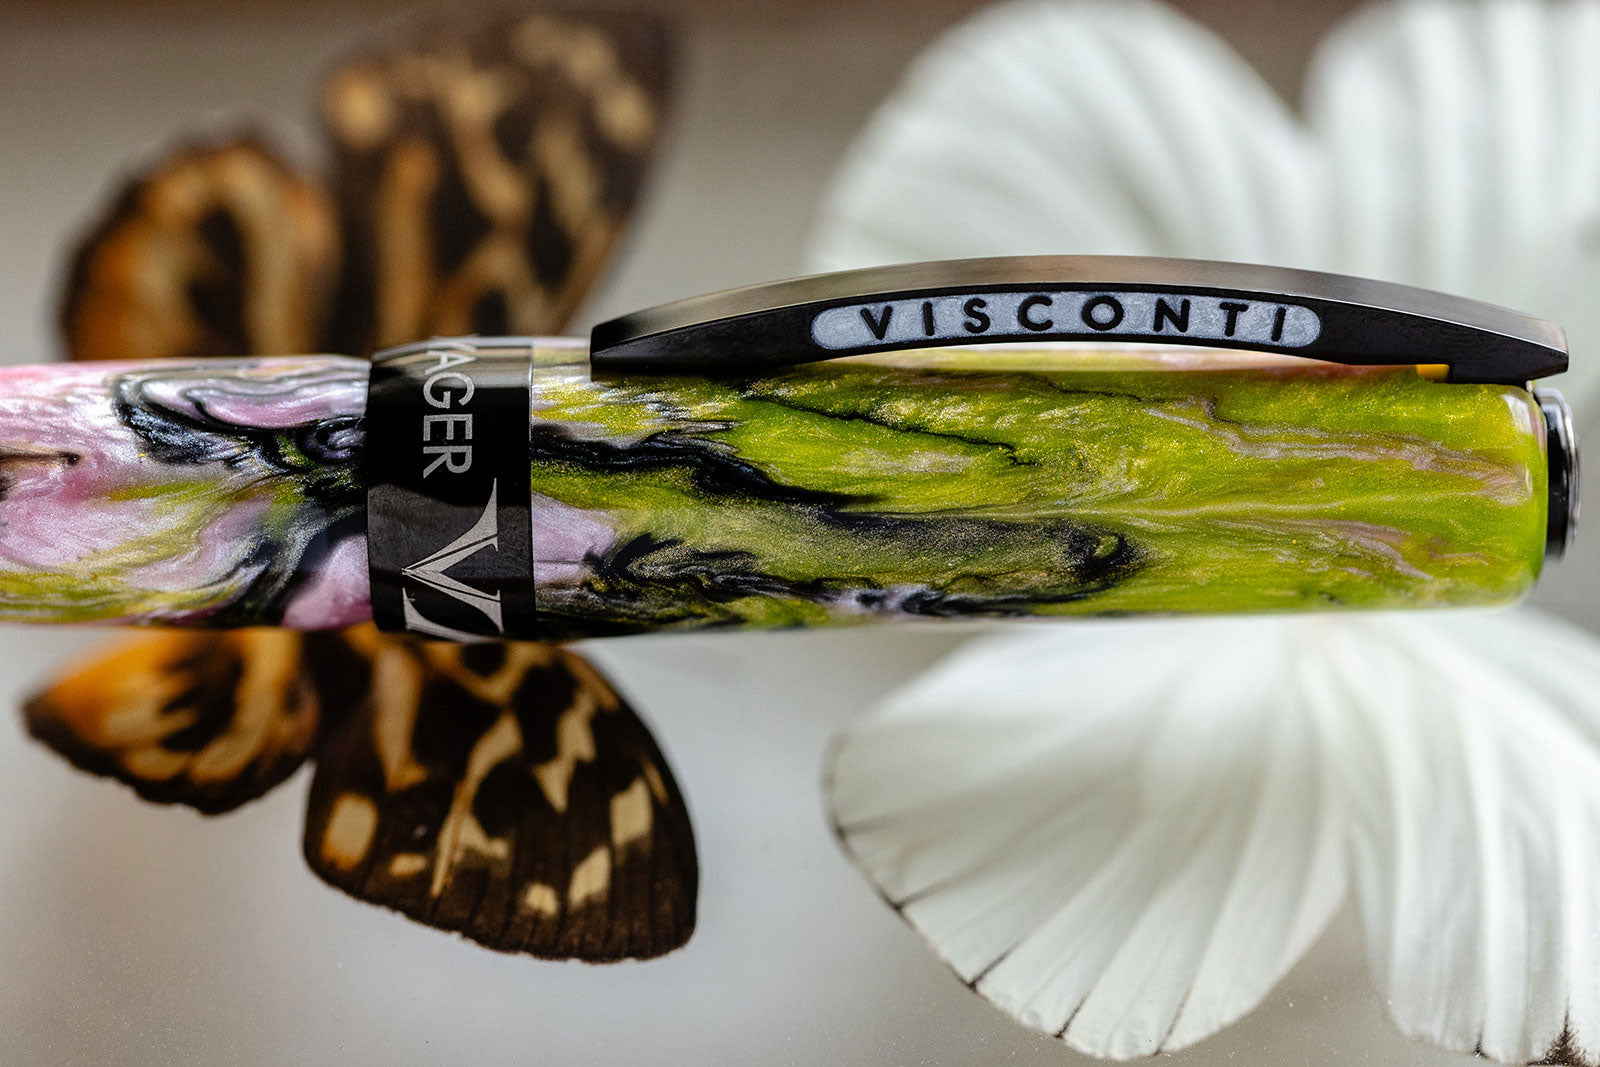 Visconti Voyager Mariposa "Butterfly" Malachite Fountain Pen